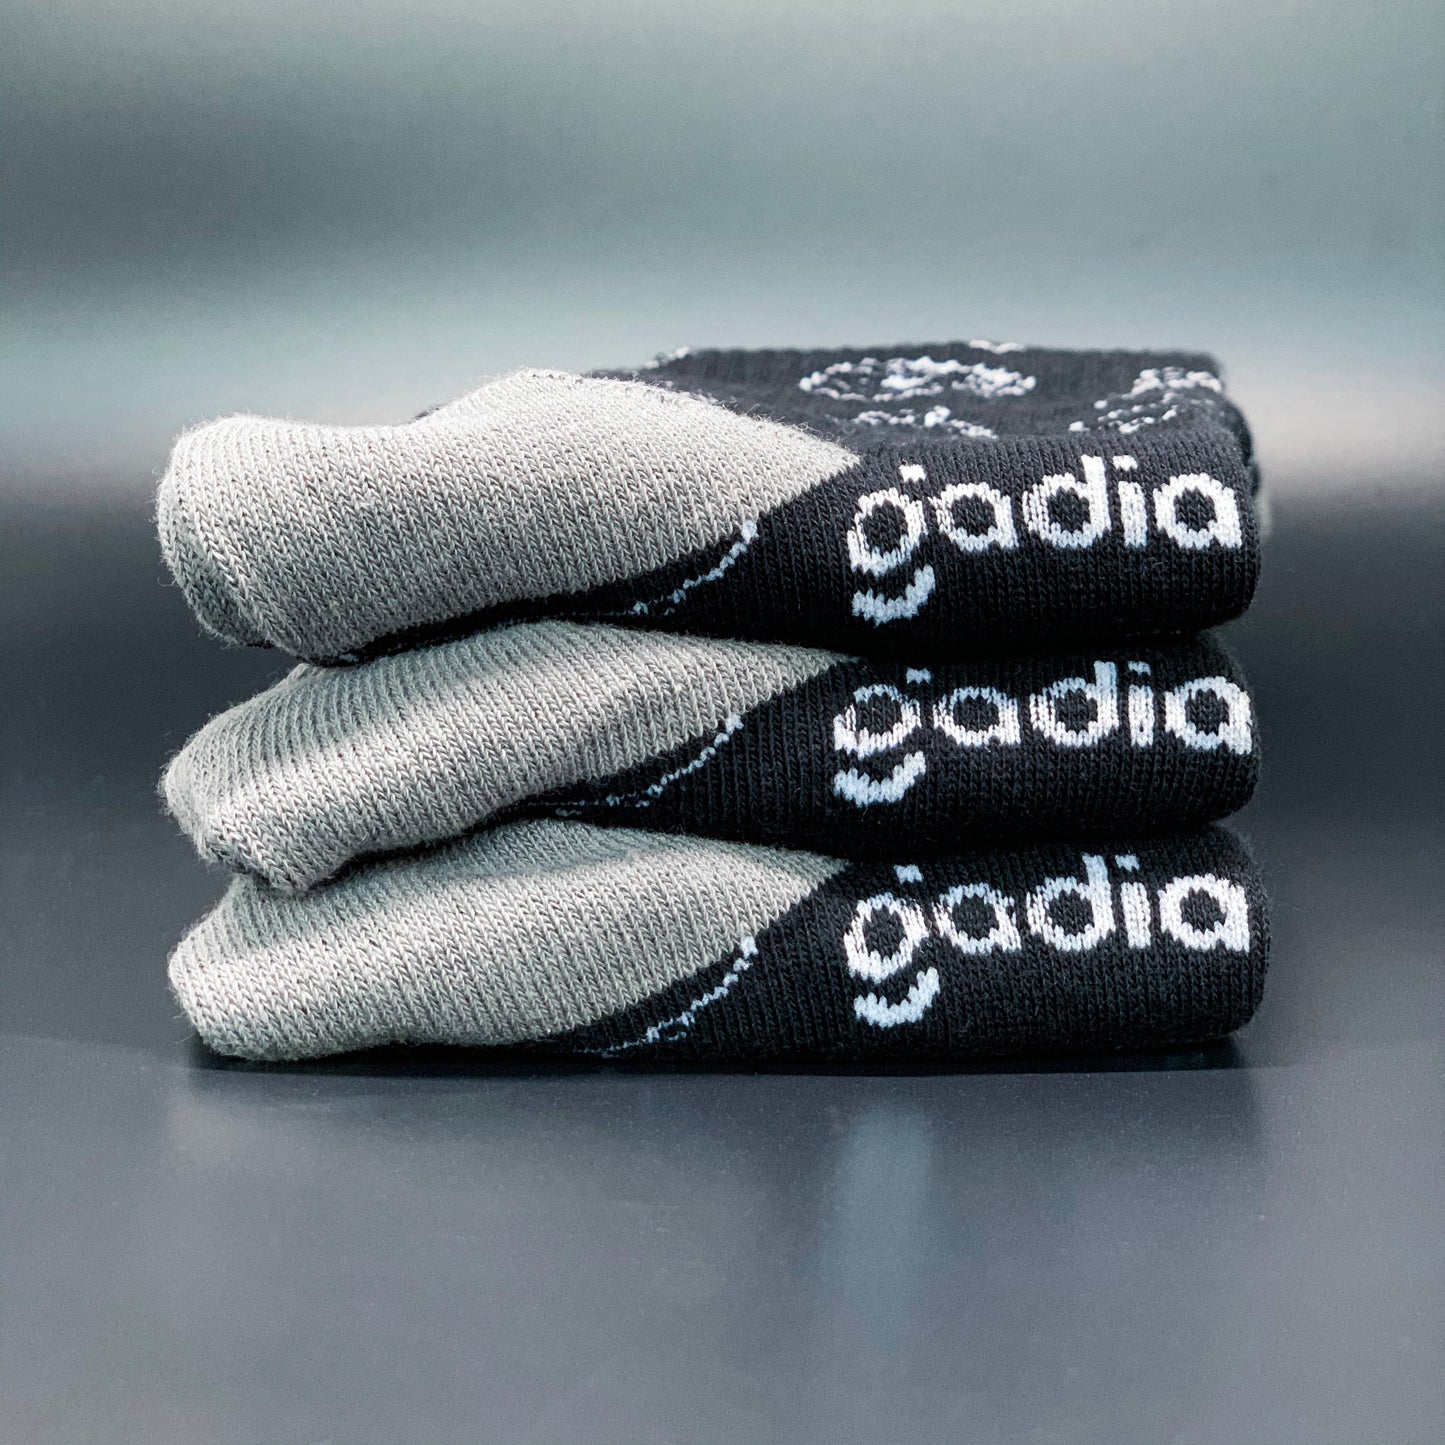 Gadia Socks 3.0